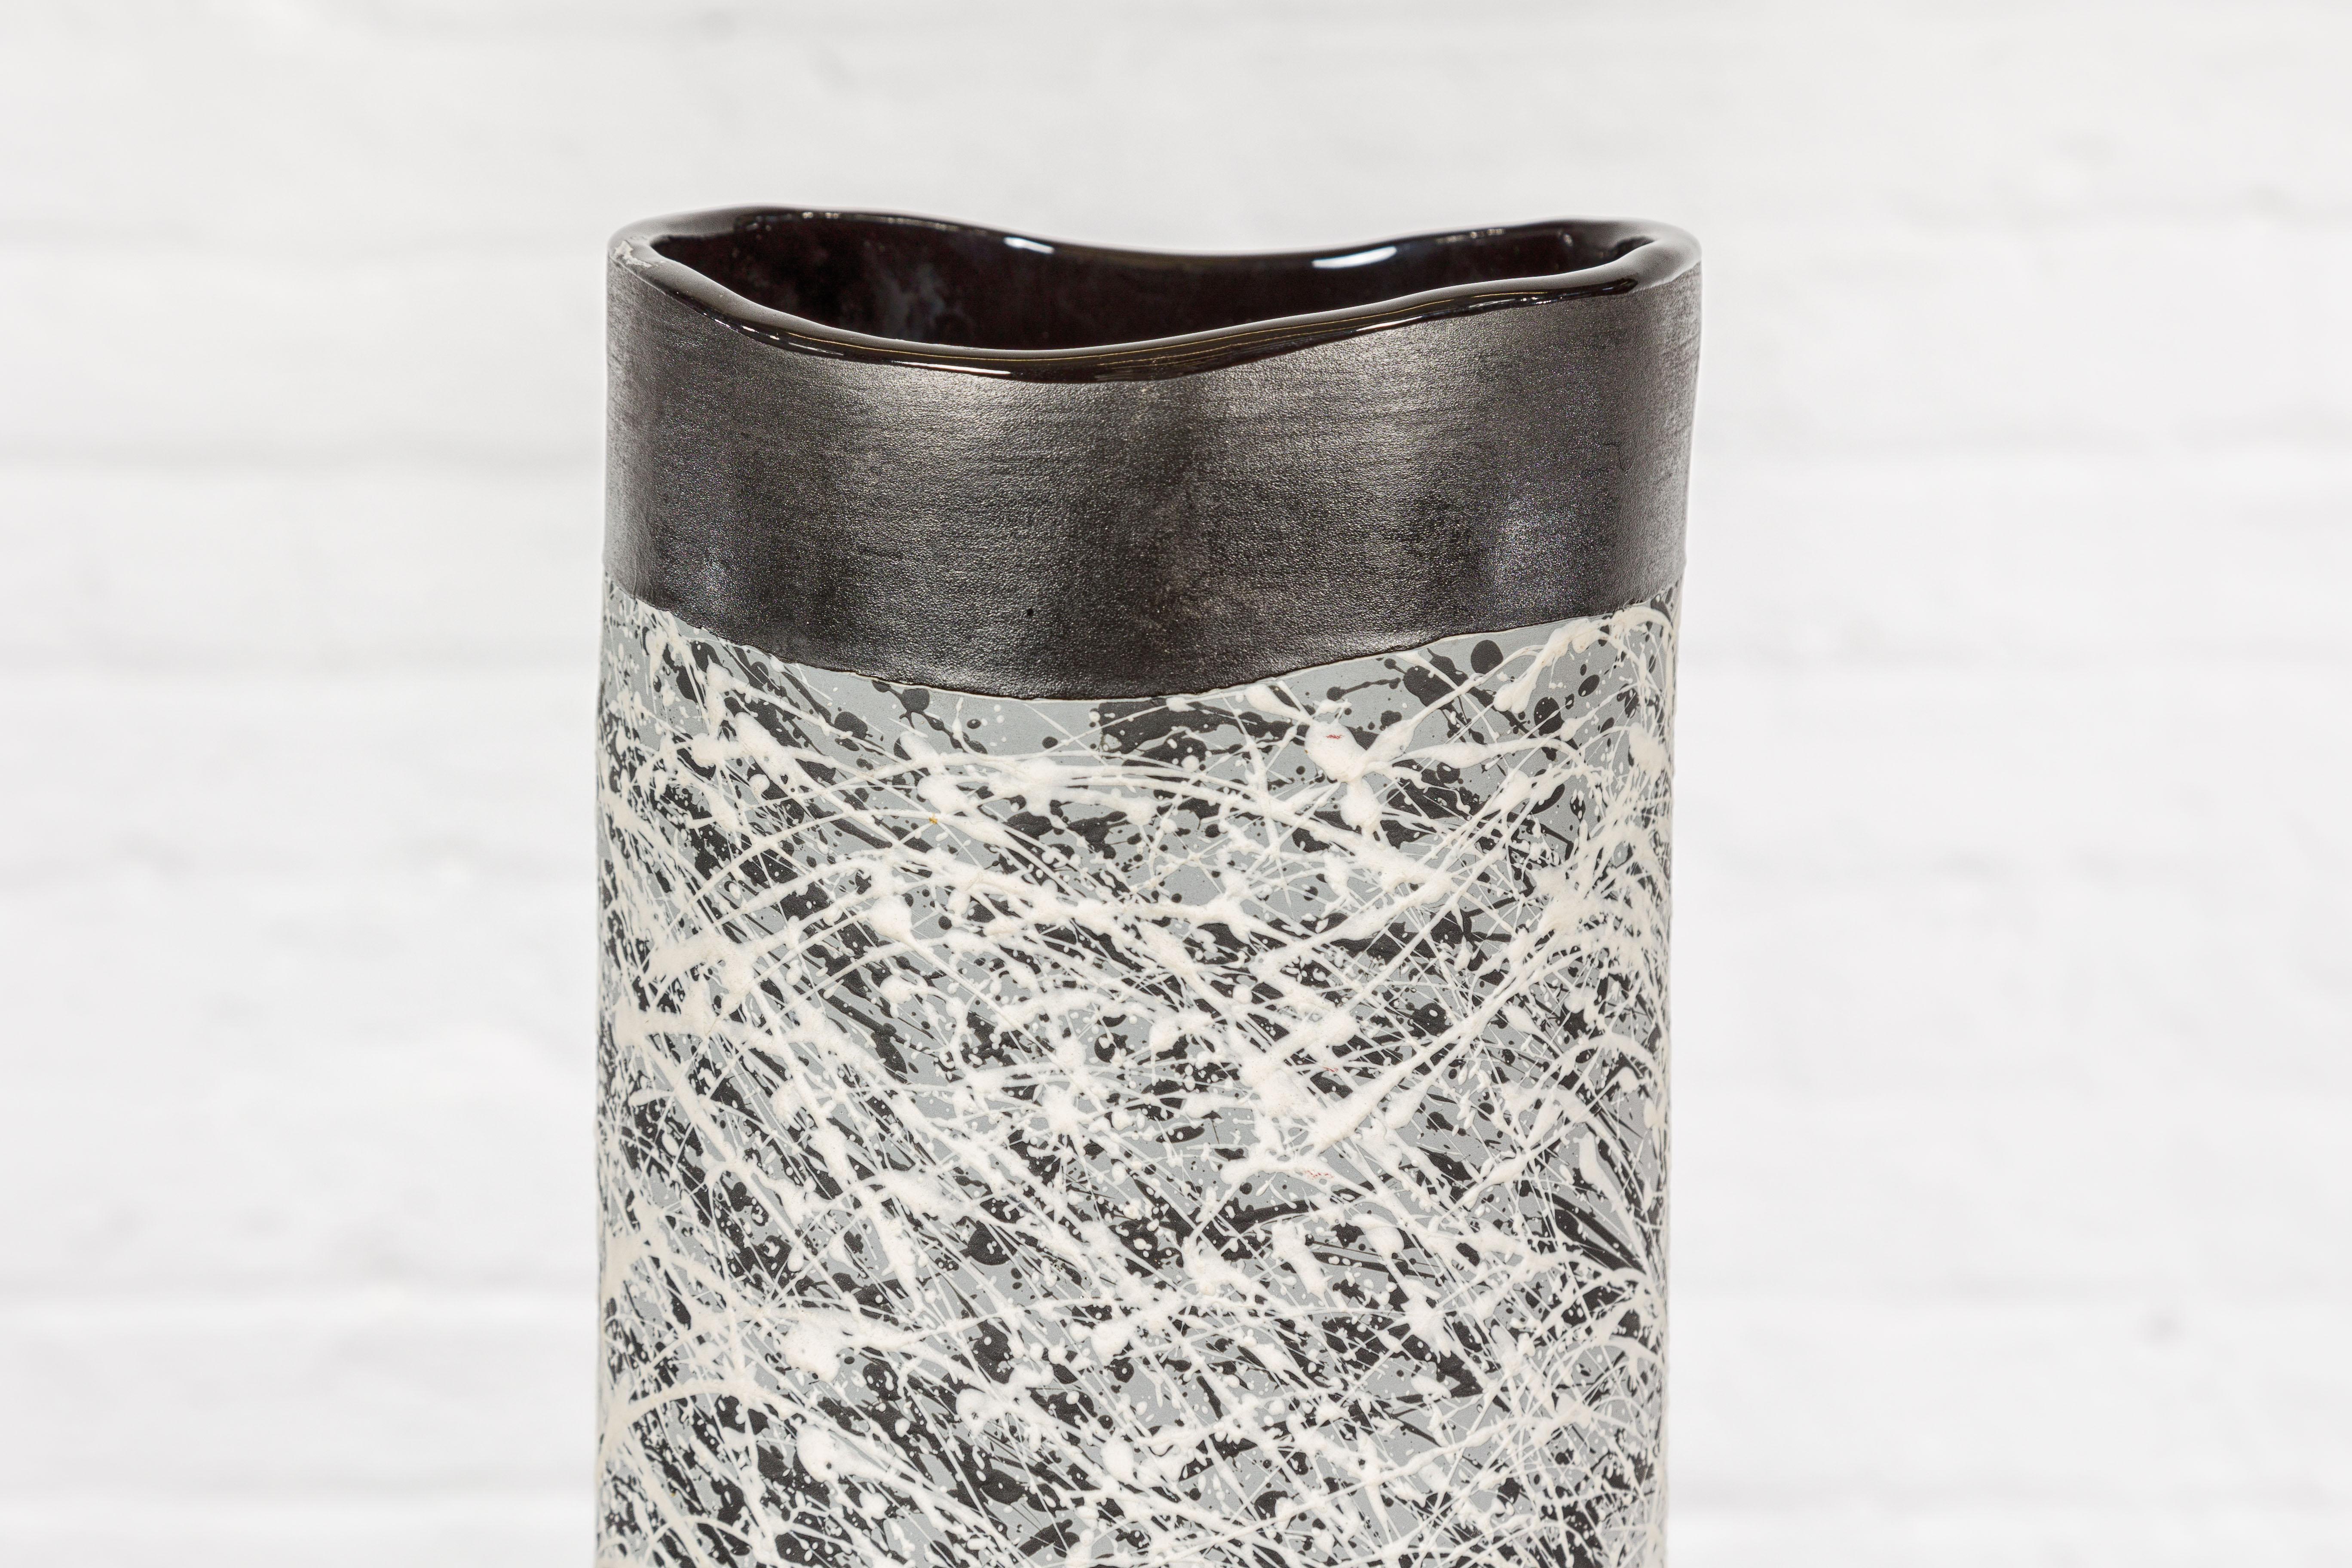 Textured Black, Gray and Black Spattered Ceramic Vase For Sale 1